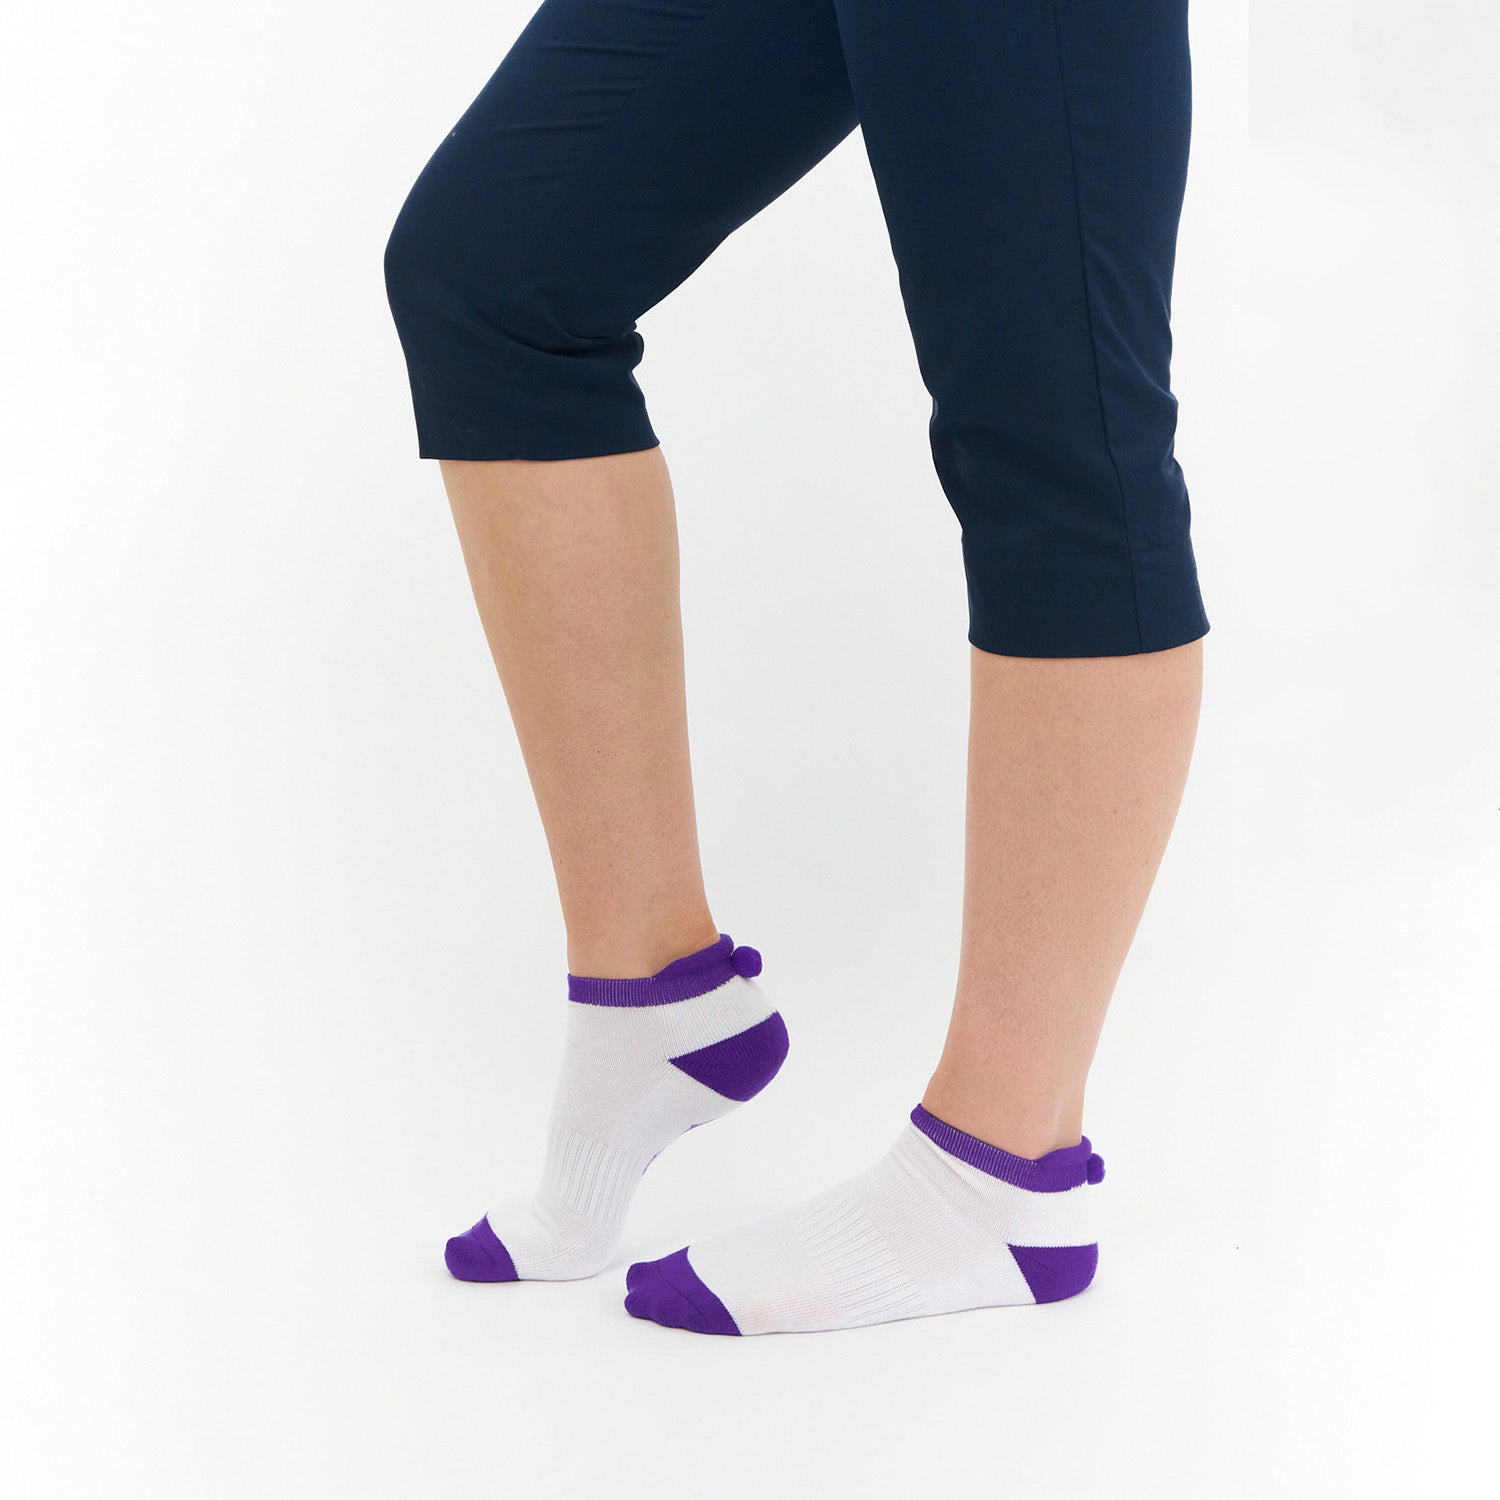 Surpizeshop Ladies 3 Pair Pack Multi-Coloured Pom Pom Golf Socks